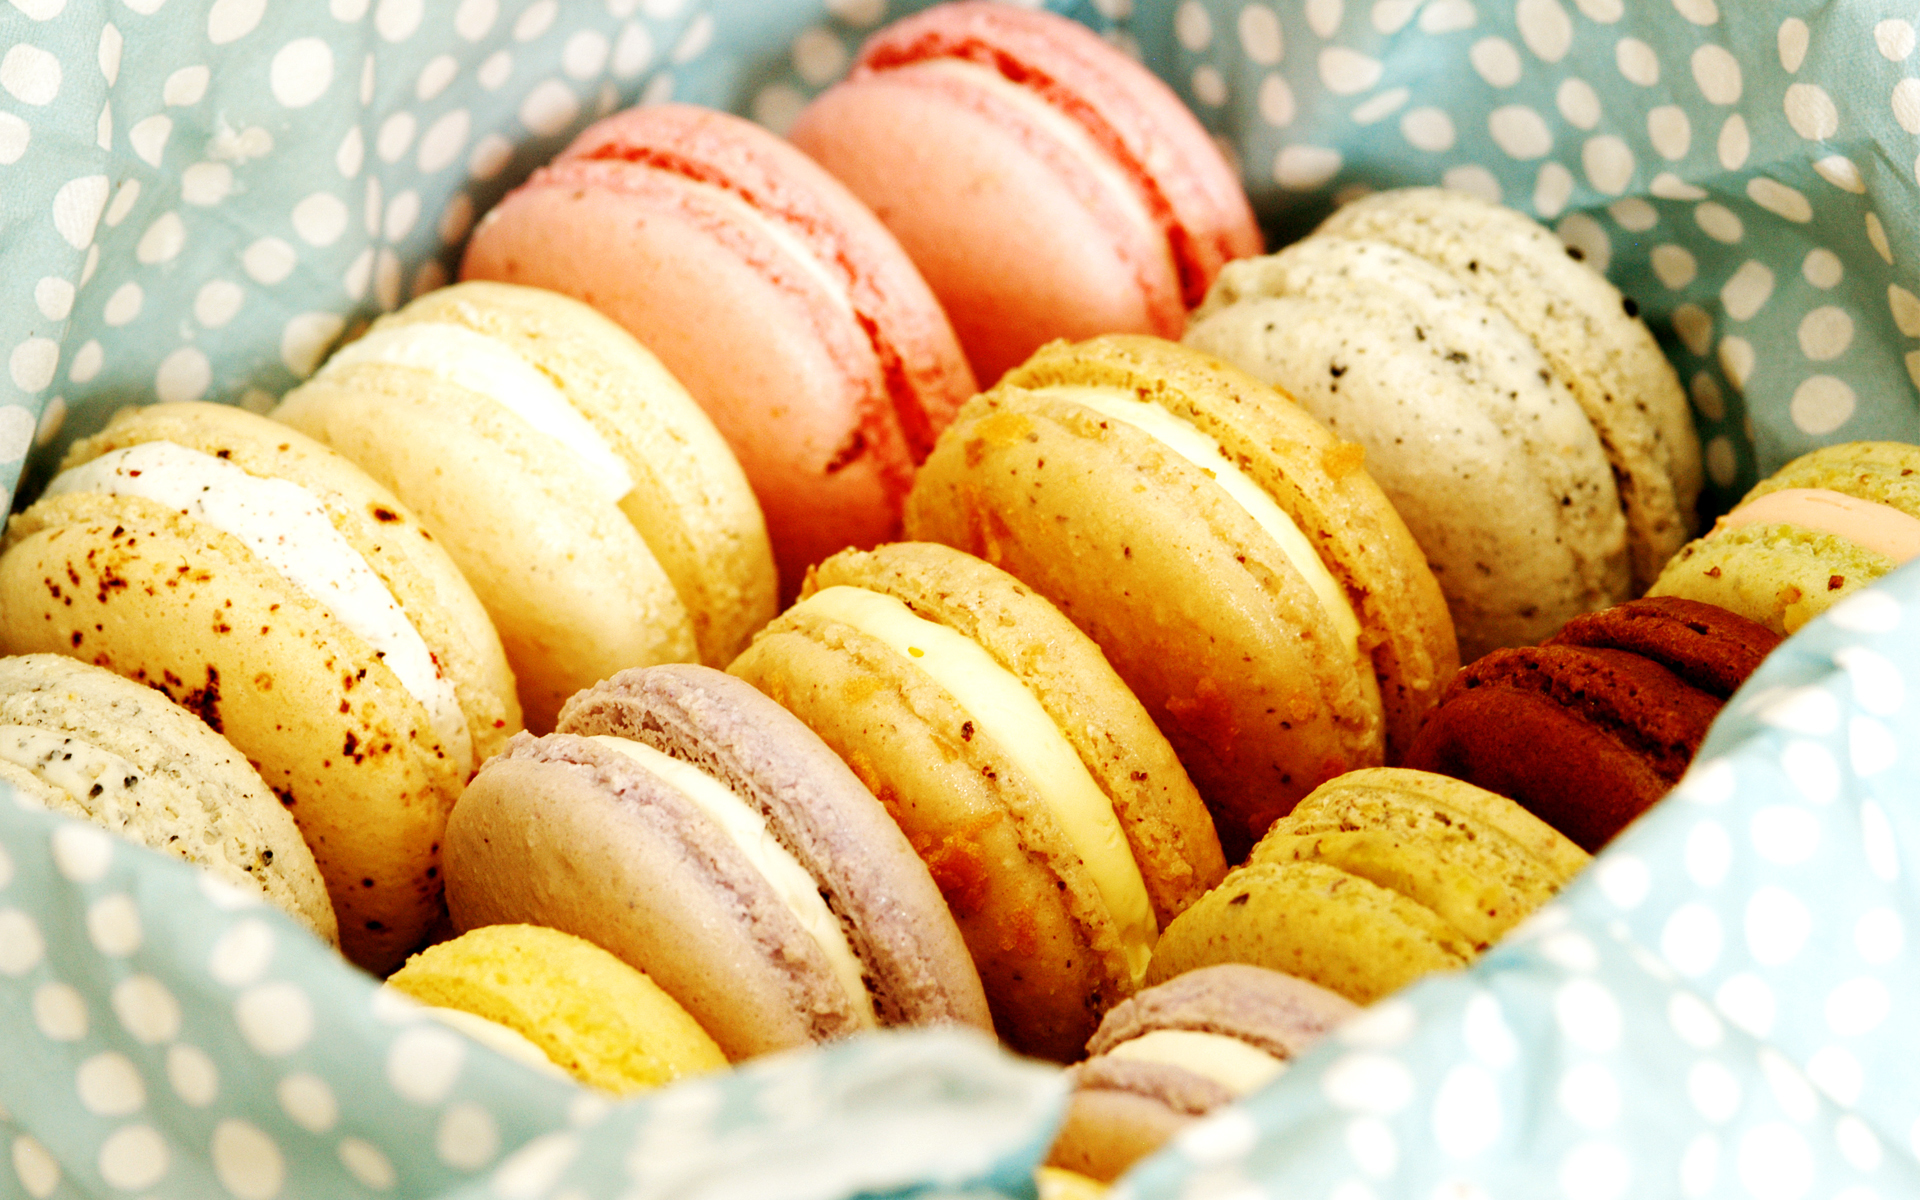 food_cookies_desserts_macaron_pastries_desktop_1920x1200_hd-wallpaper-1005986.jpg